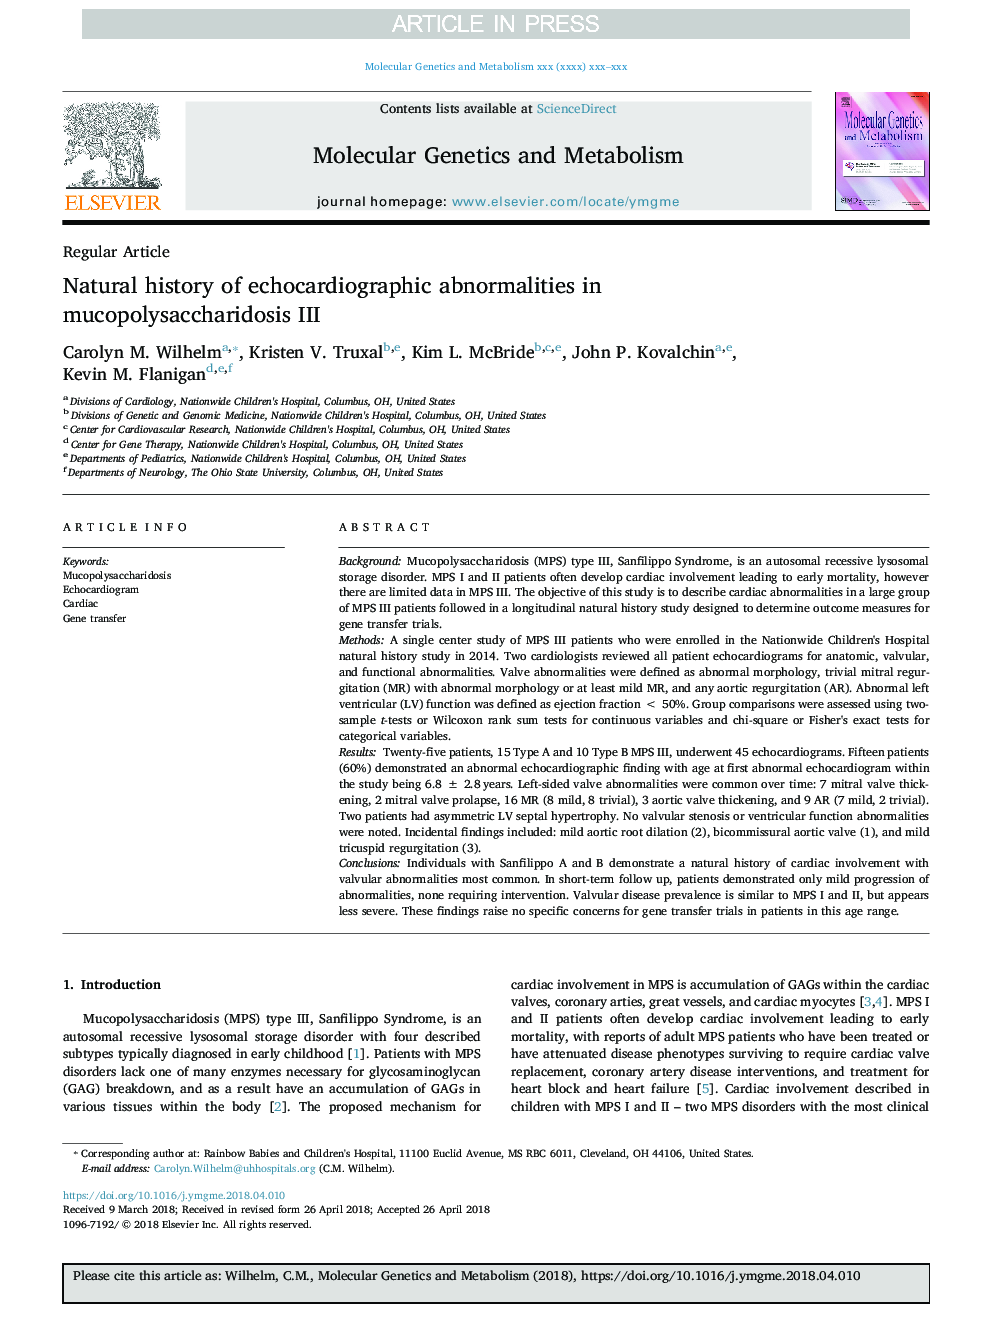 Natural history of echocardiographic abnormalities in mucopolysaccharidosis III